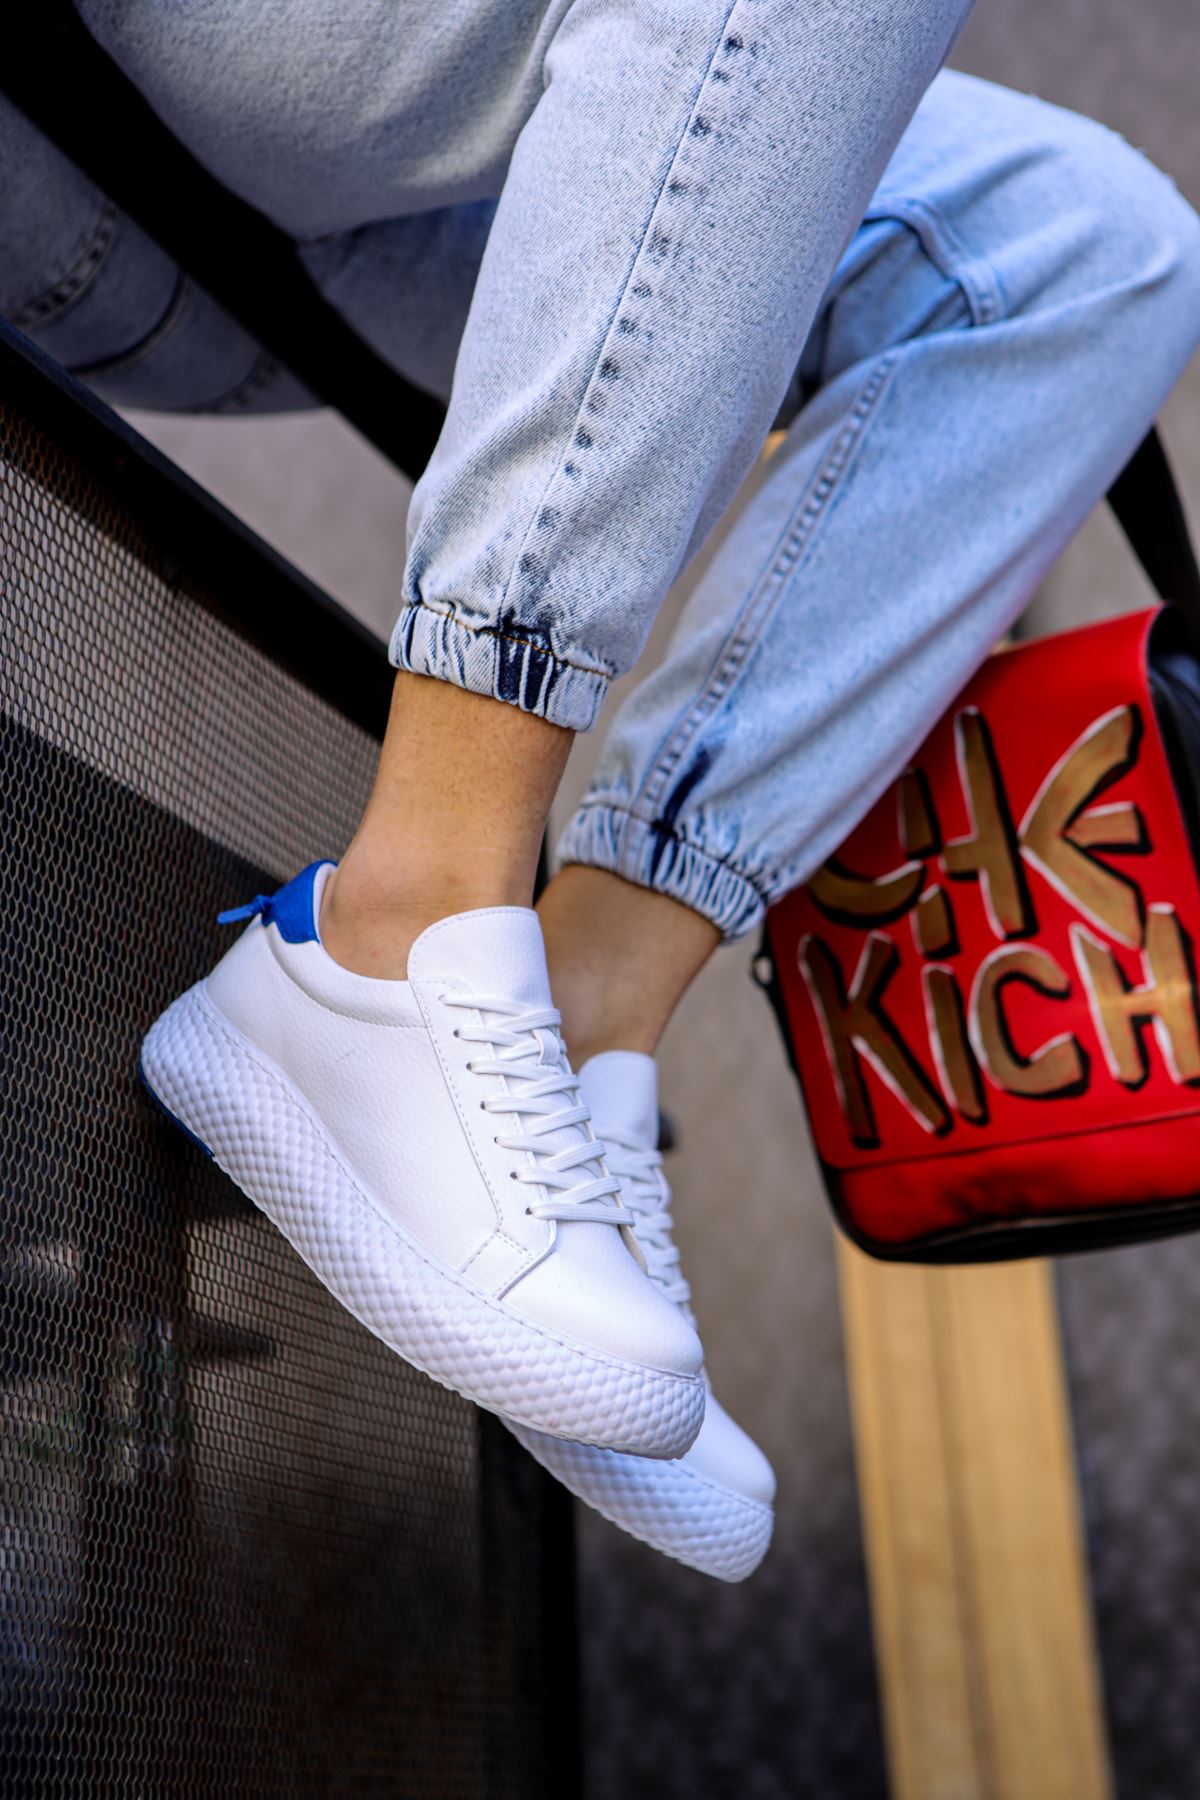 CH107 Men's Full White Casual Sneaker Sports Shoes - STREET MODE ™